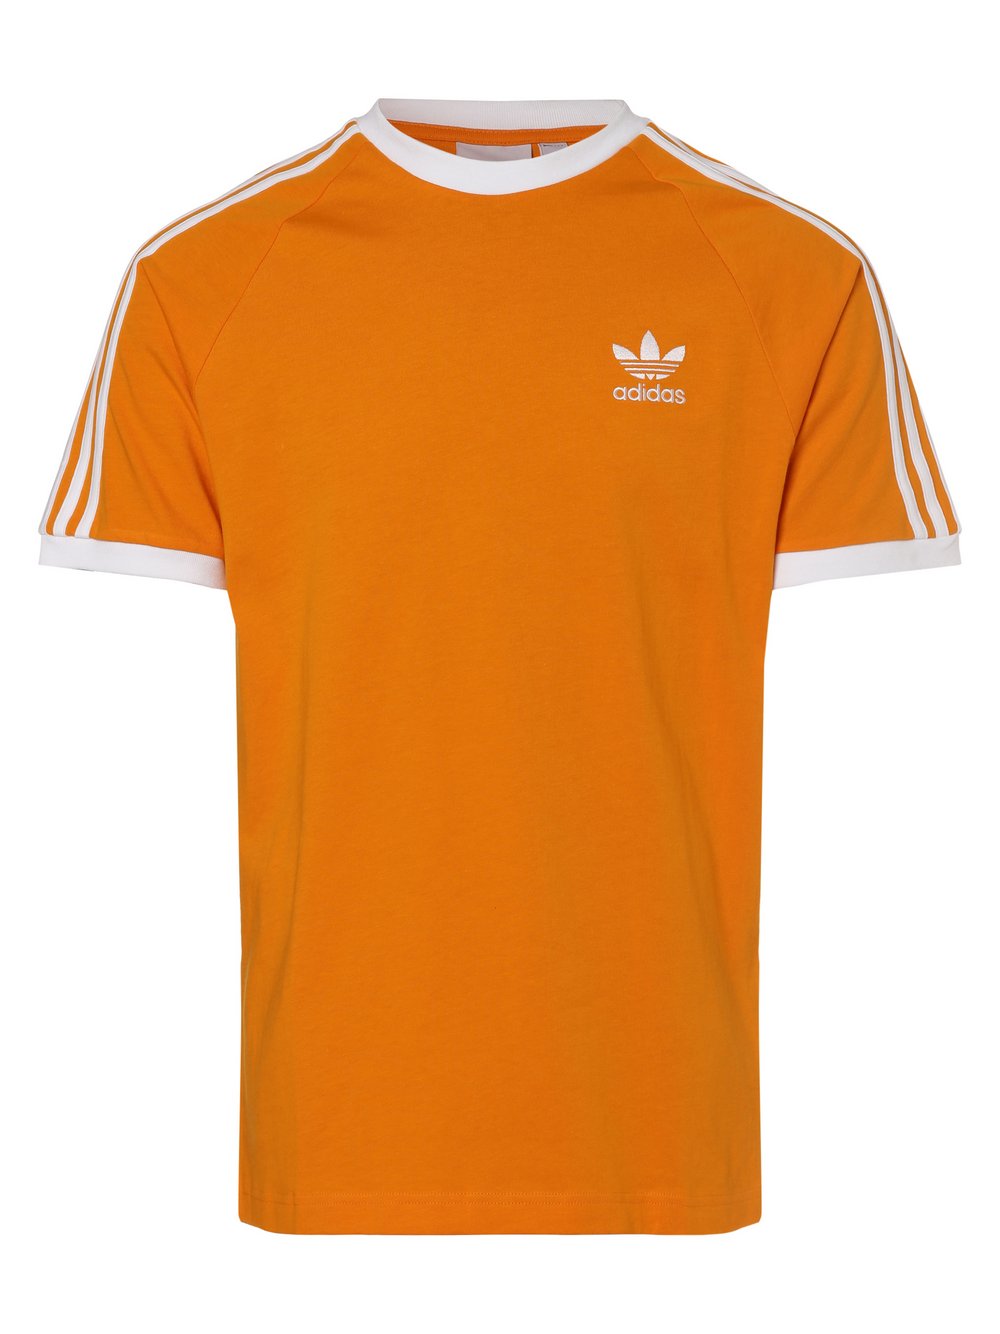 Adidas Originals - T-shirt męski, pomarańczowy